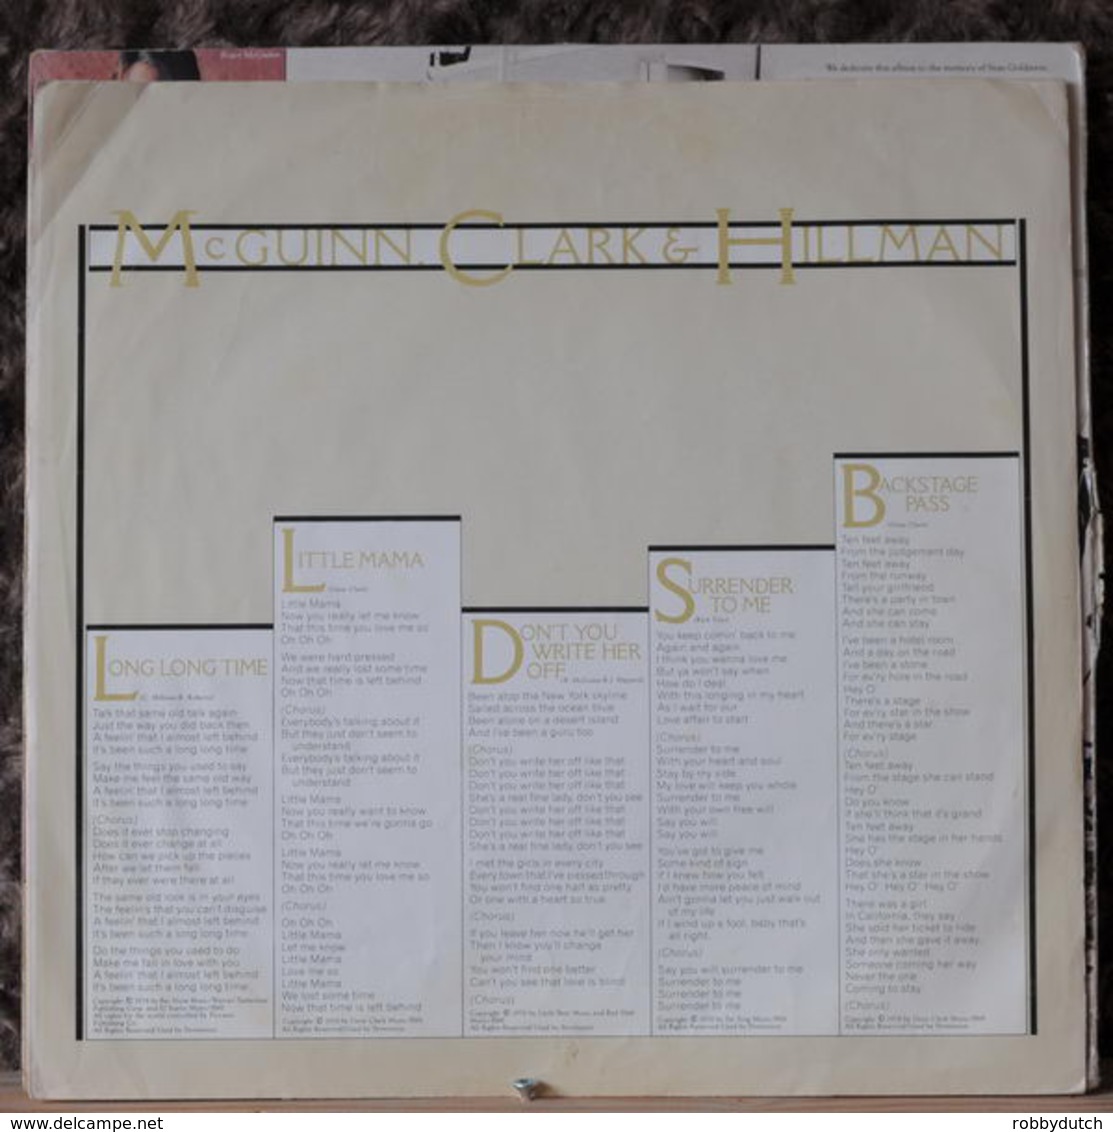 * LP *  McGUINN, CLARK & HILLMAN (Holland 1979) - Country & Folk